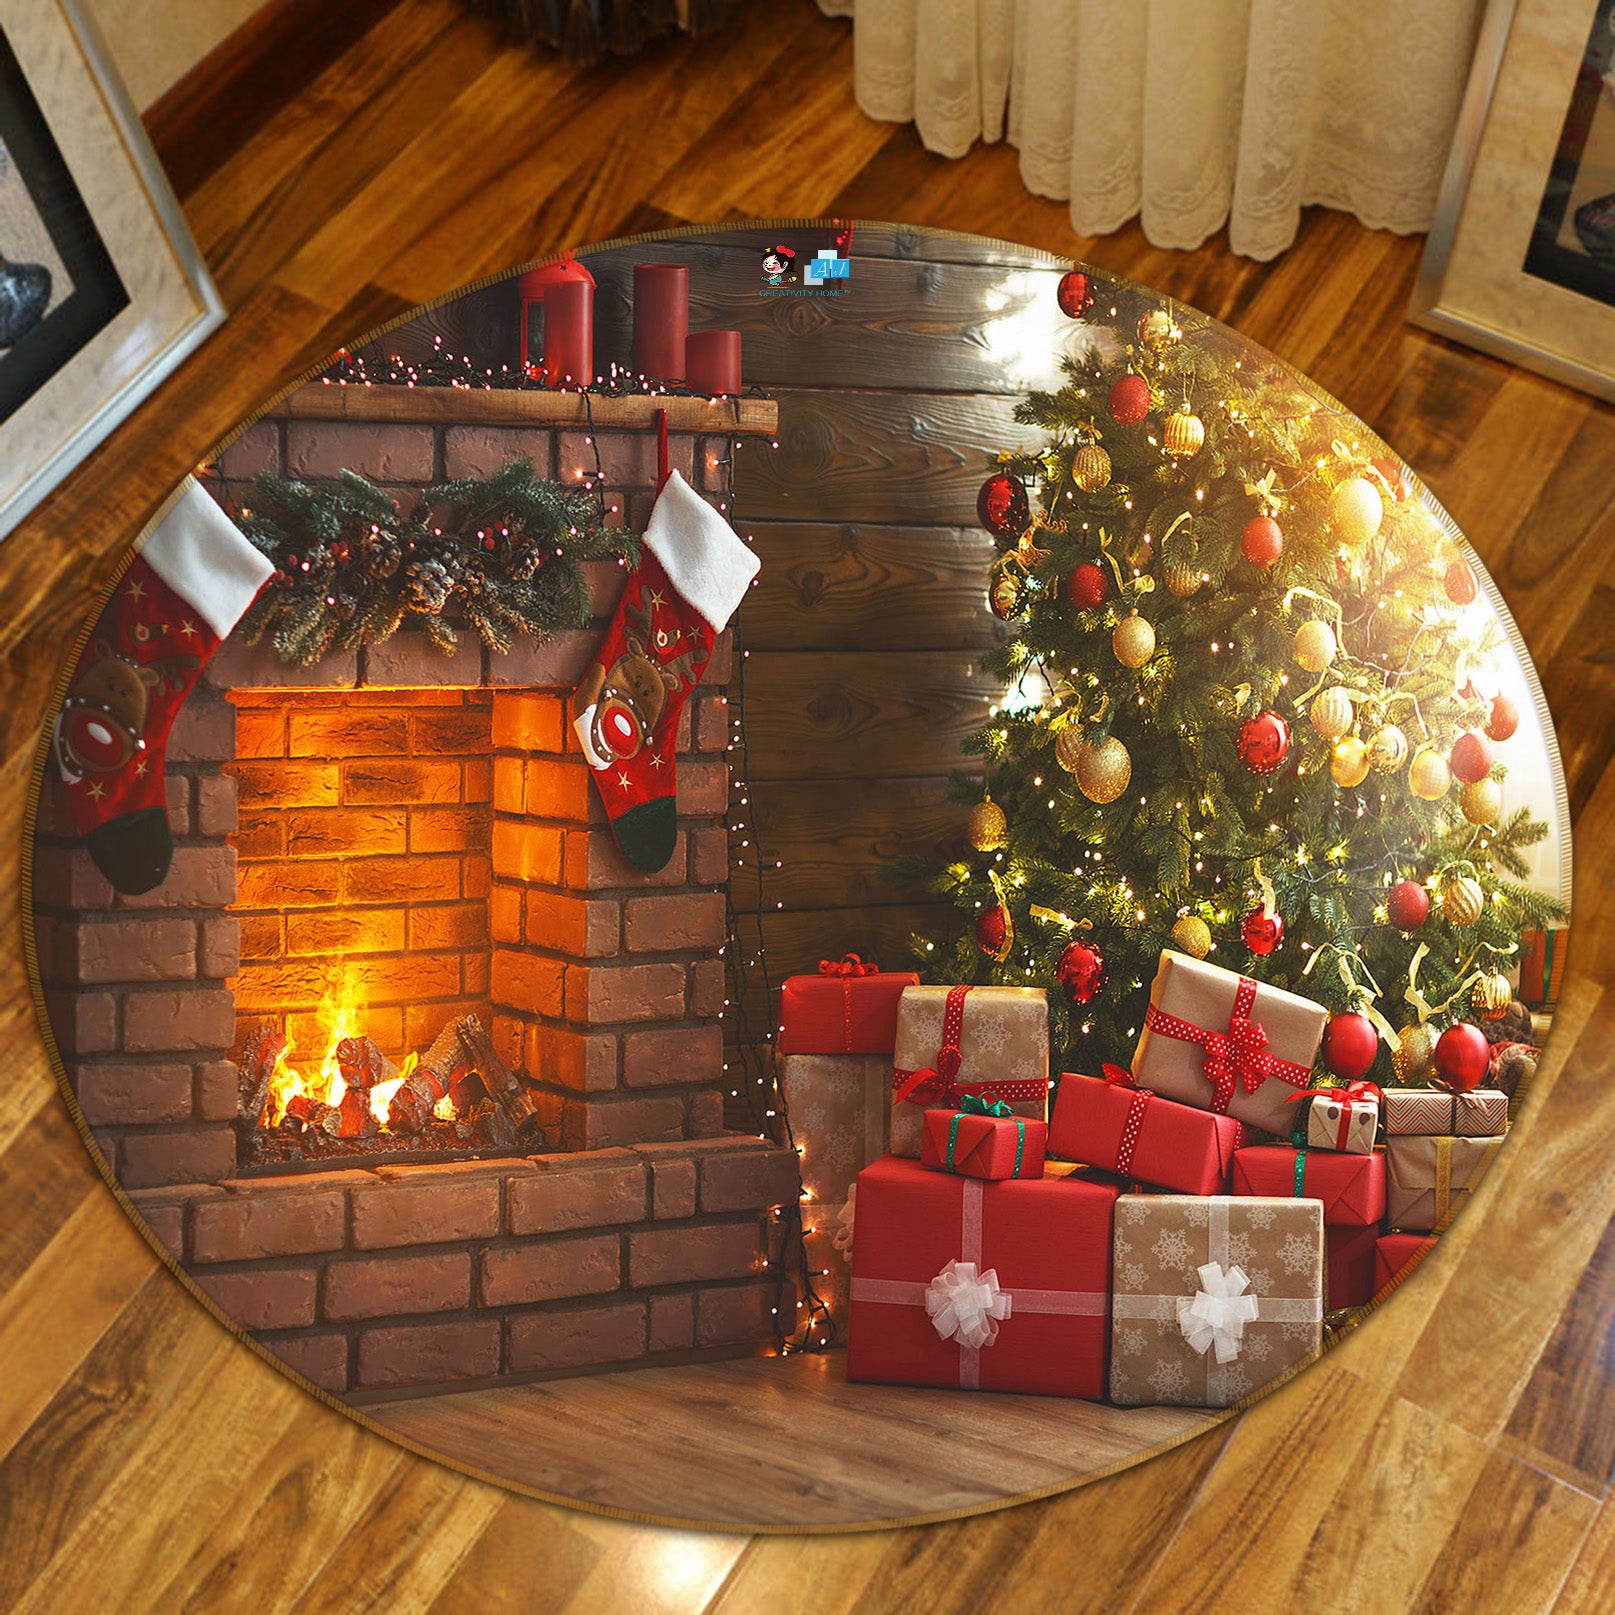 3D Fireplace Gift 56058 Christmas Round Non Slip Rug Mat Xmas